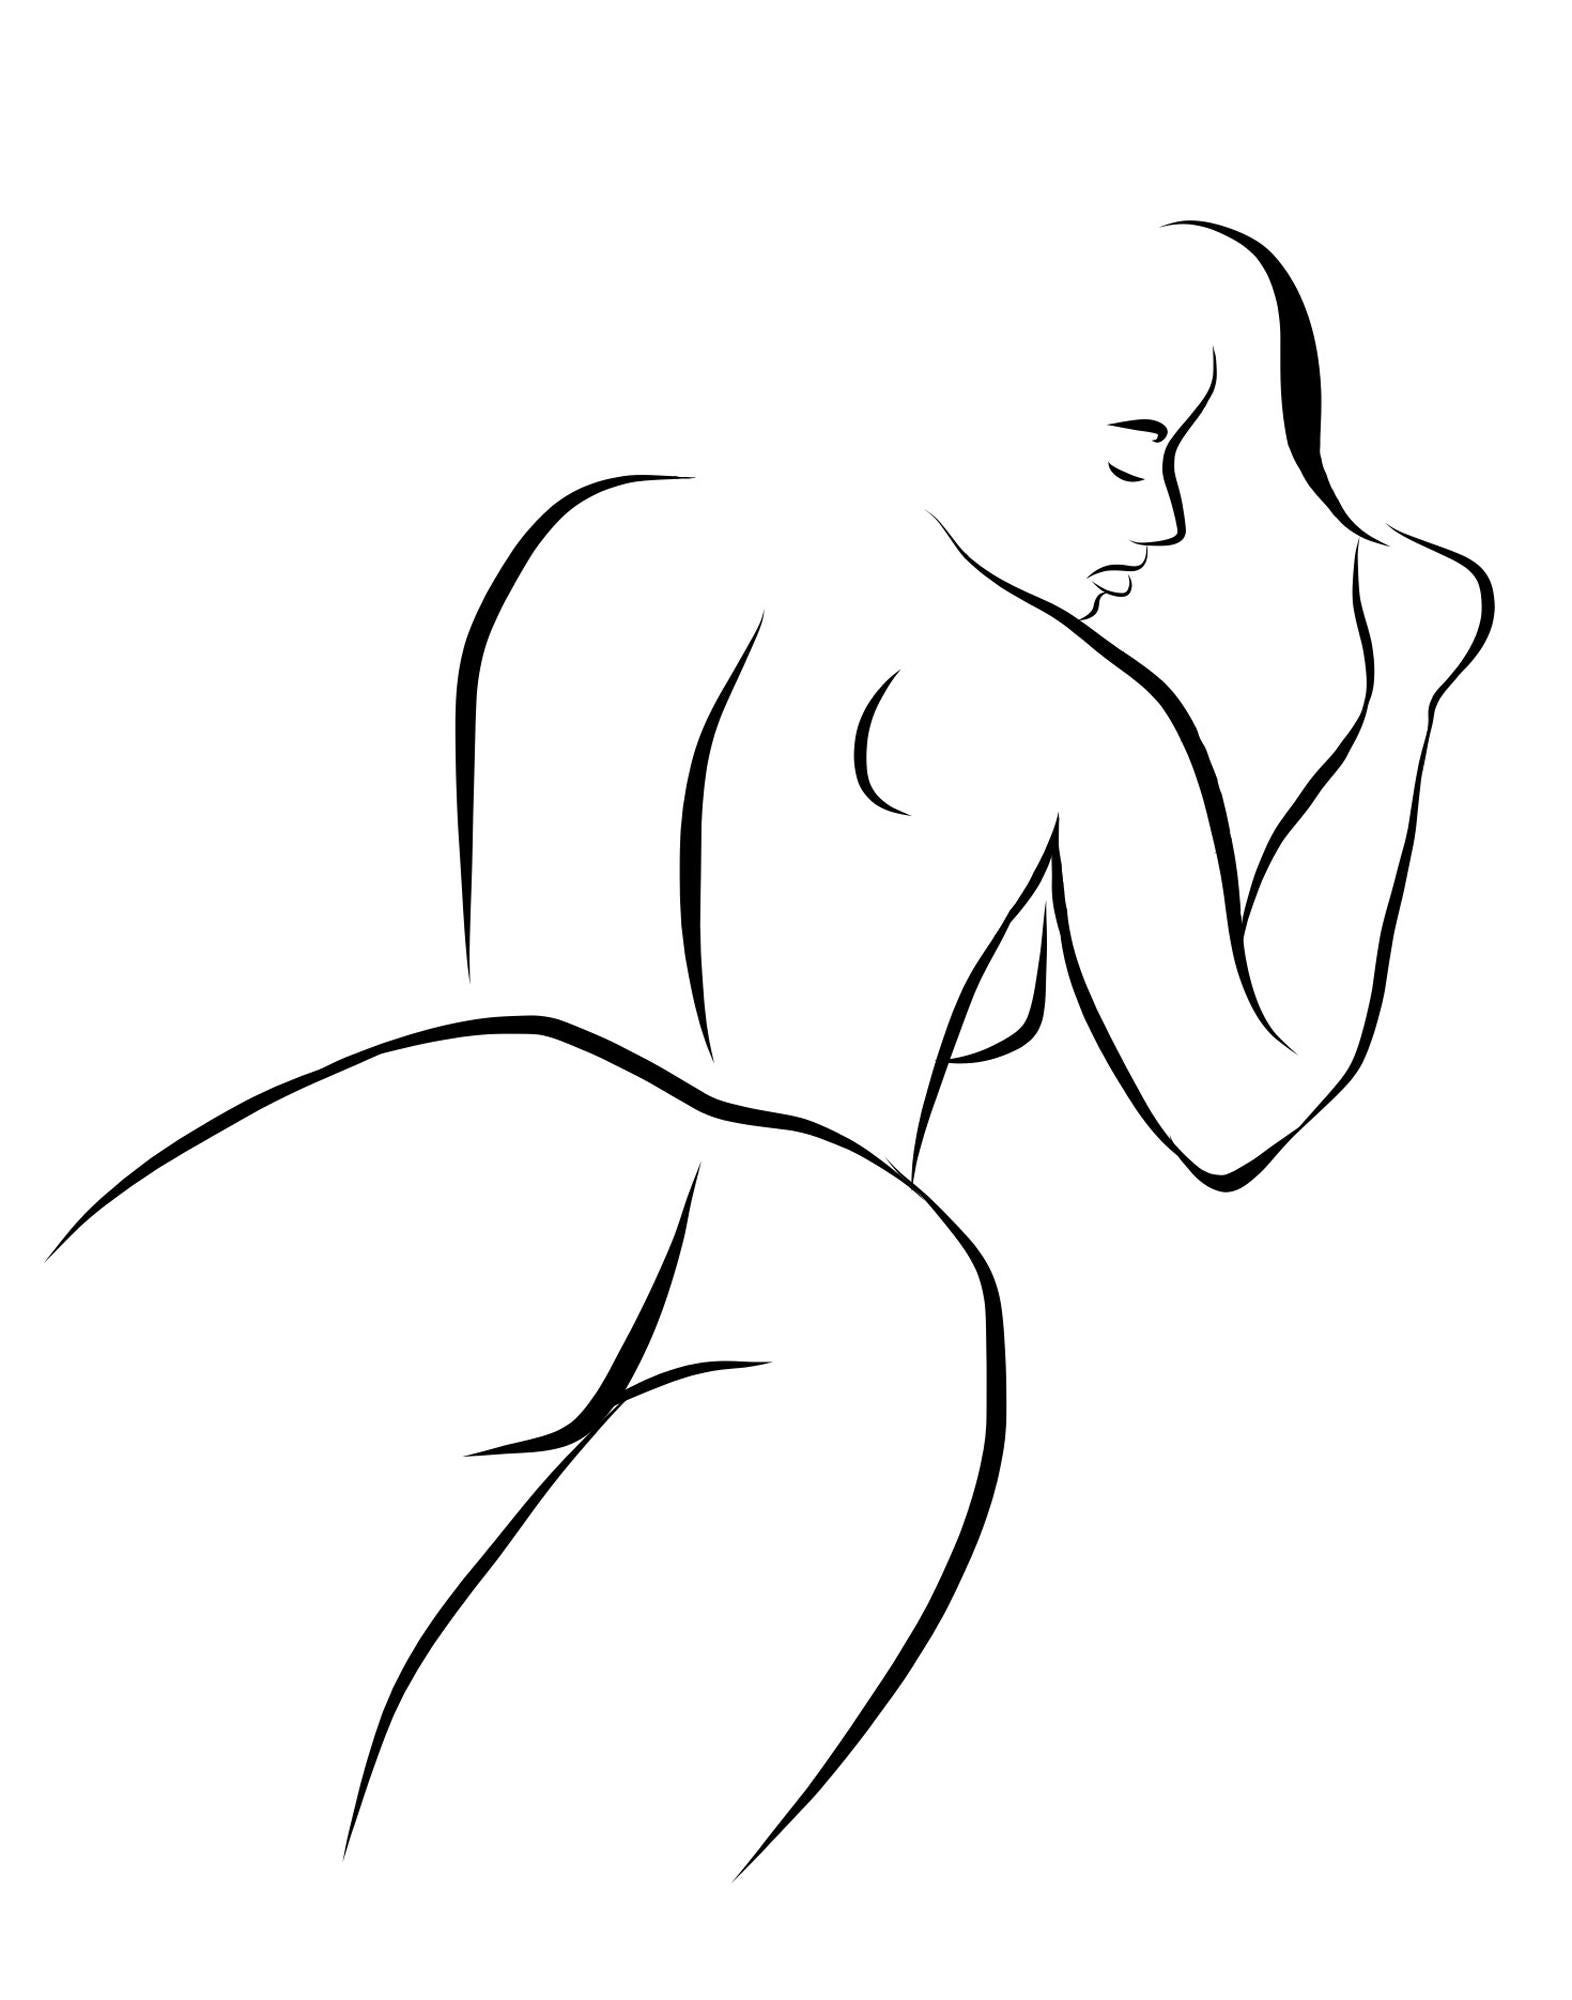 Michael Binkley Nude Print - Haiku #10, 1/50 - Digital Vector Drawing B&W Reclining Female Nude Woman Figure